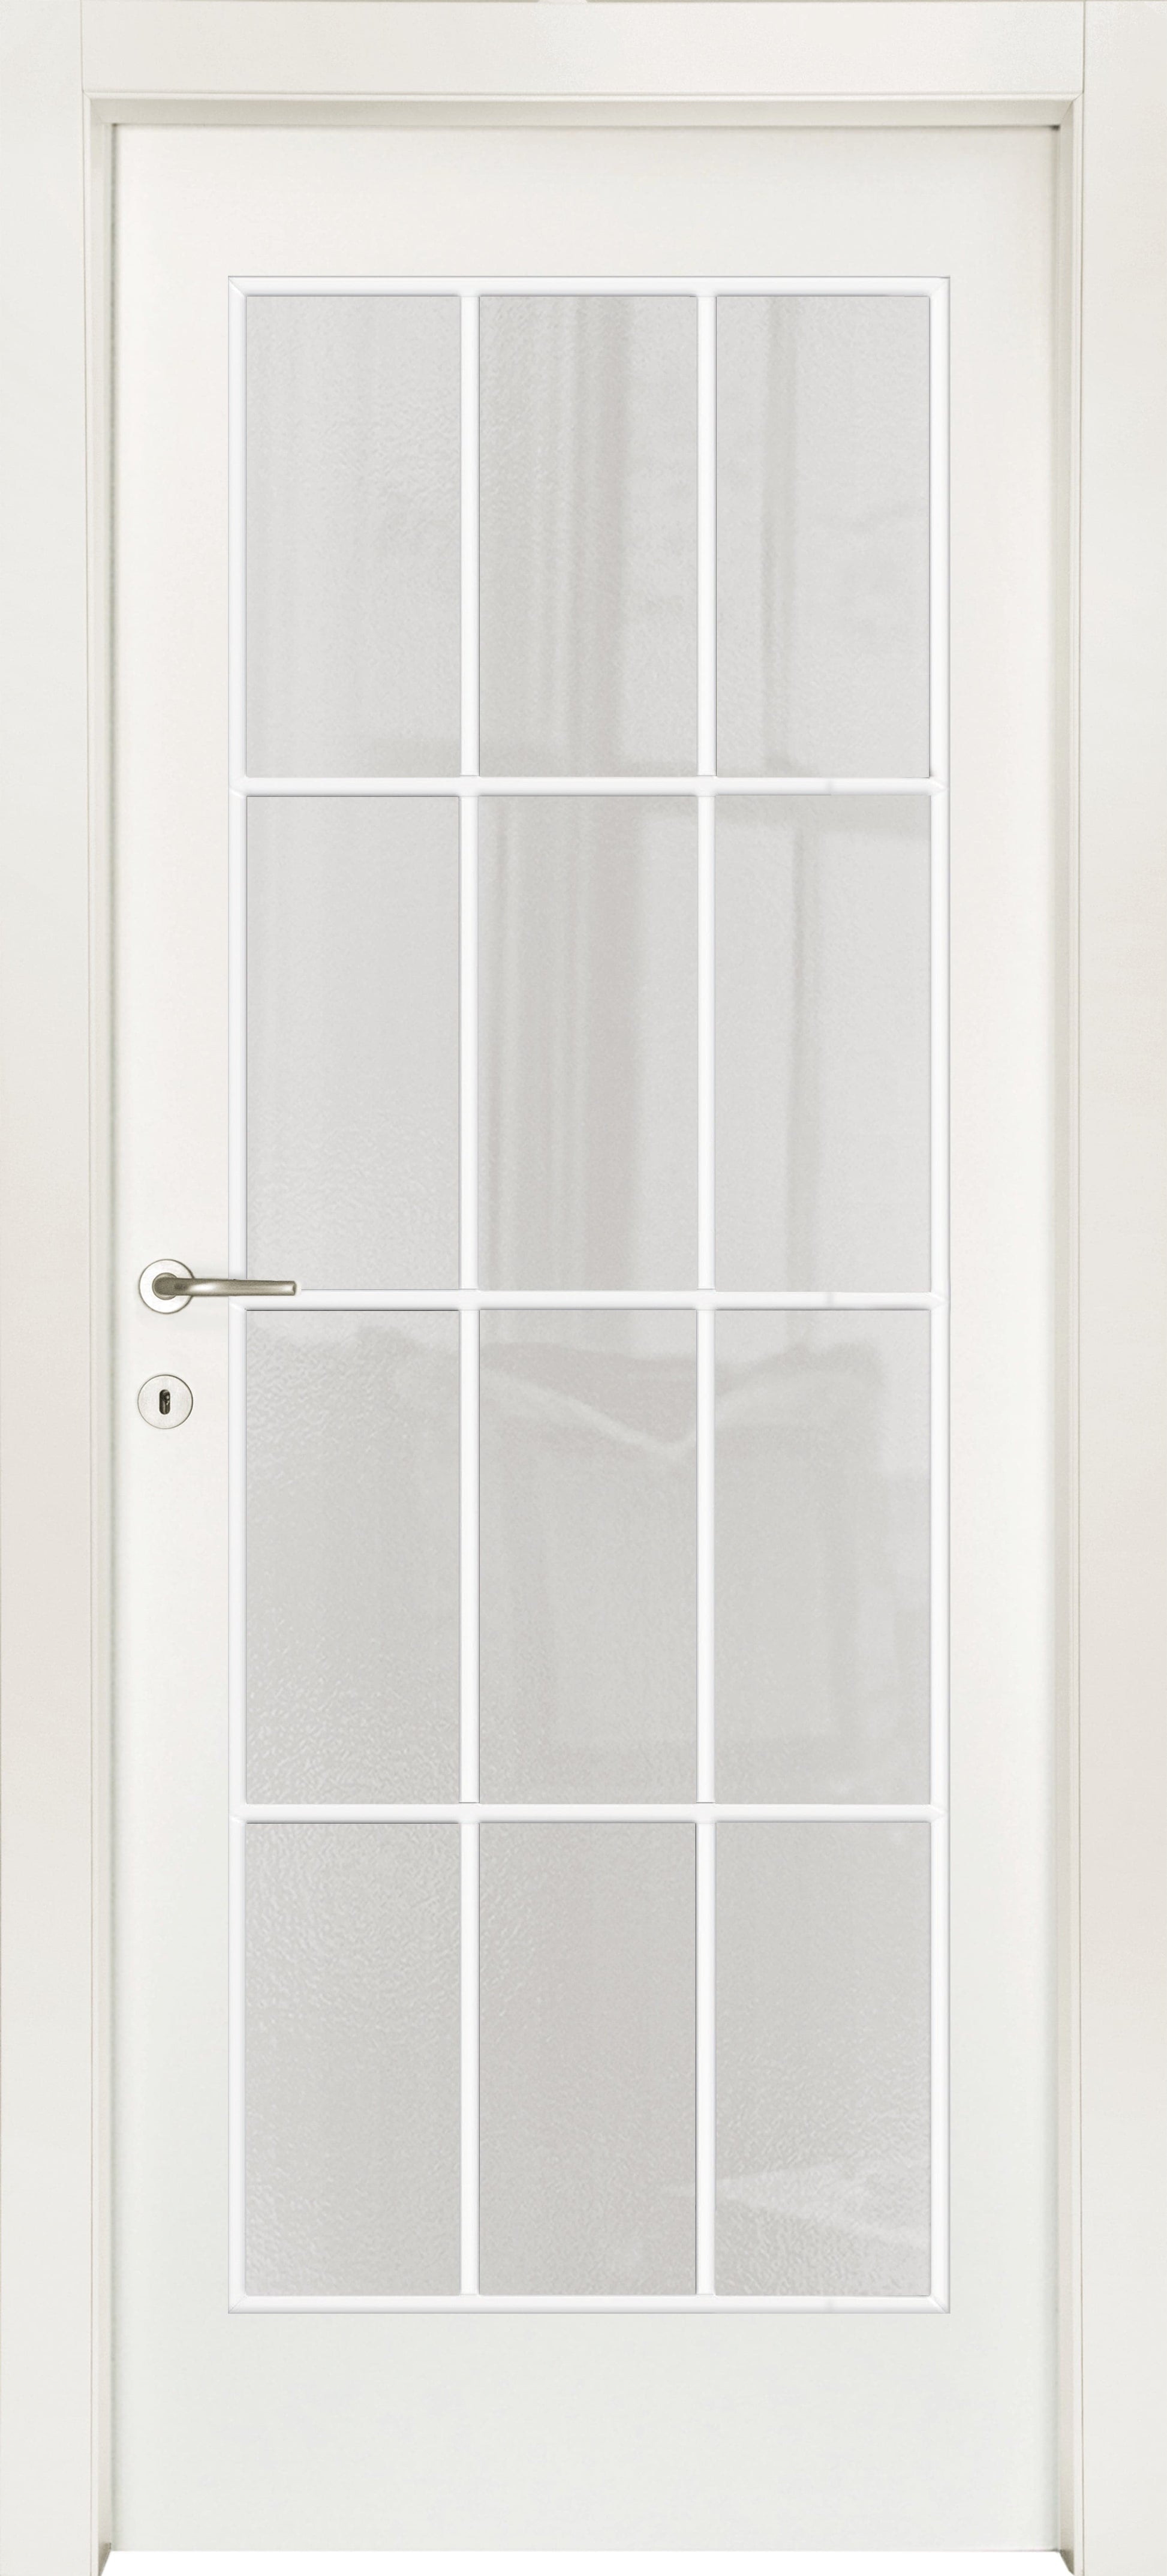 STRAUSS DOOR 60 X 210 RIGHT MILK GLASS WITH WHITE MUNTIN BAR